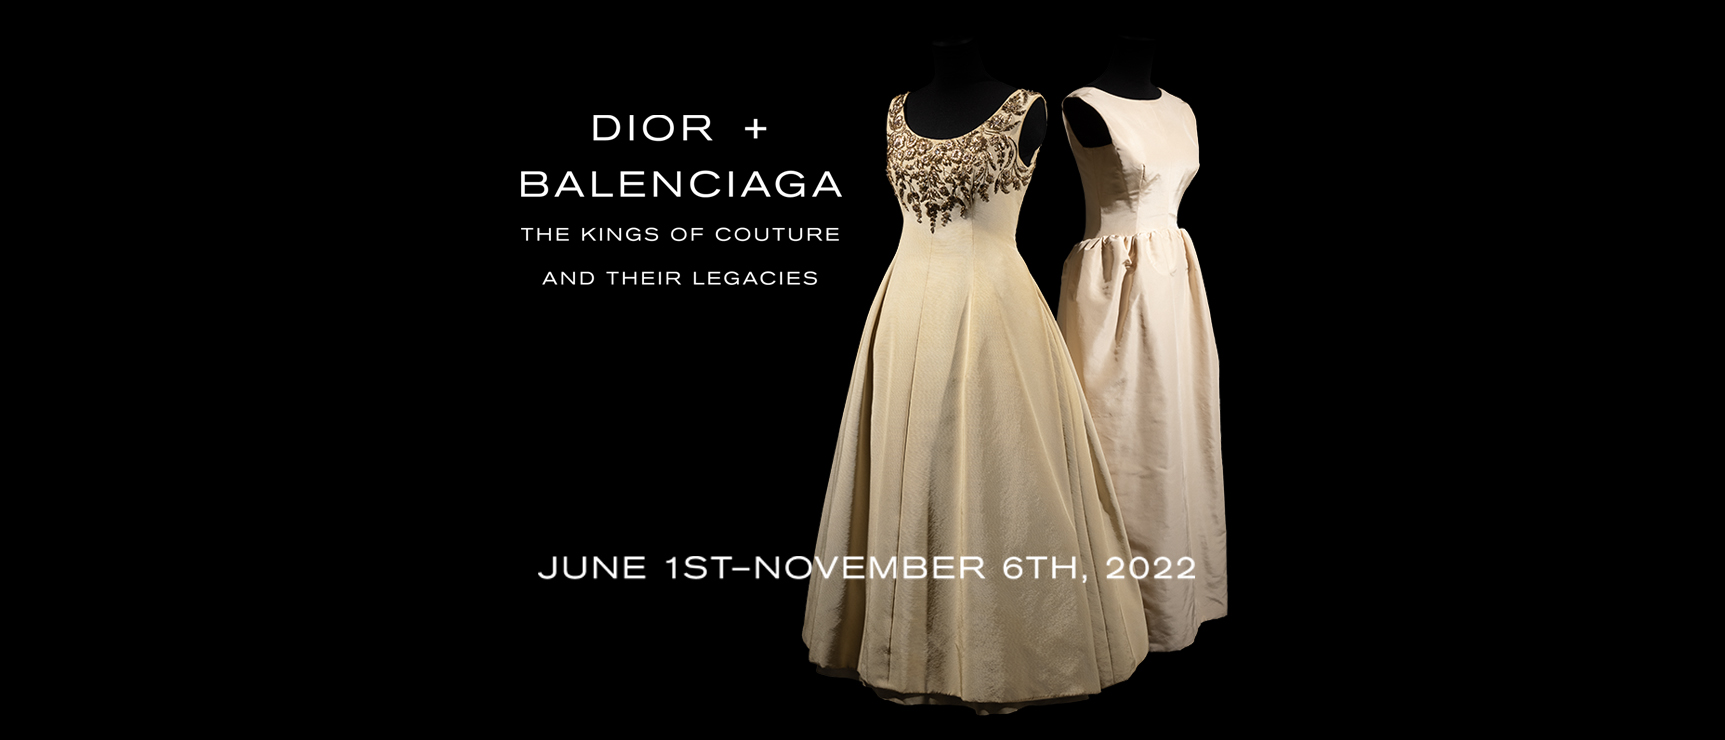 Dior + Balenciaga: The Kings of Couture and Their Legacies June 1, 2022 - November 6, 2022